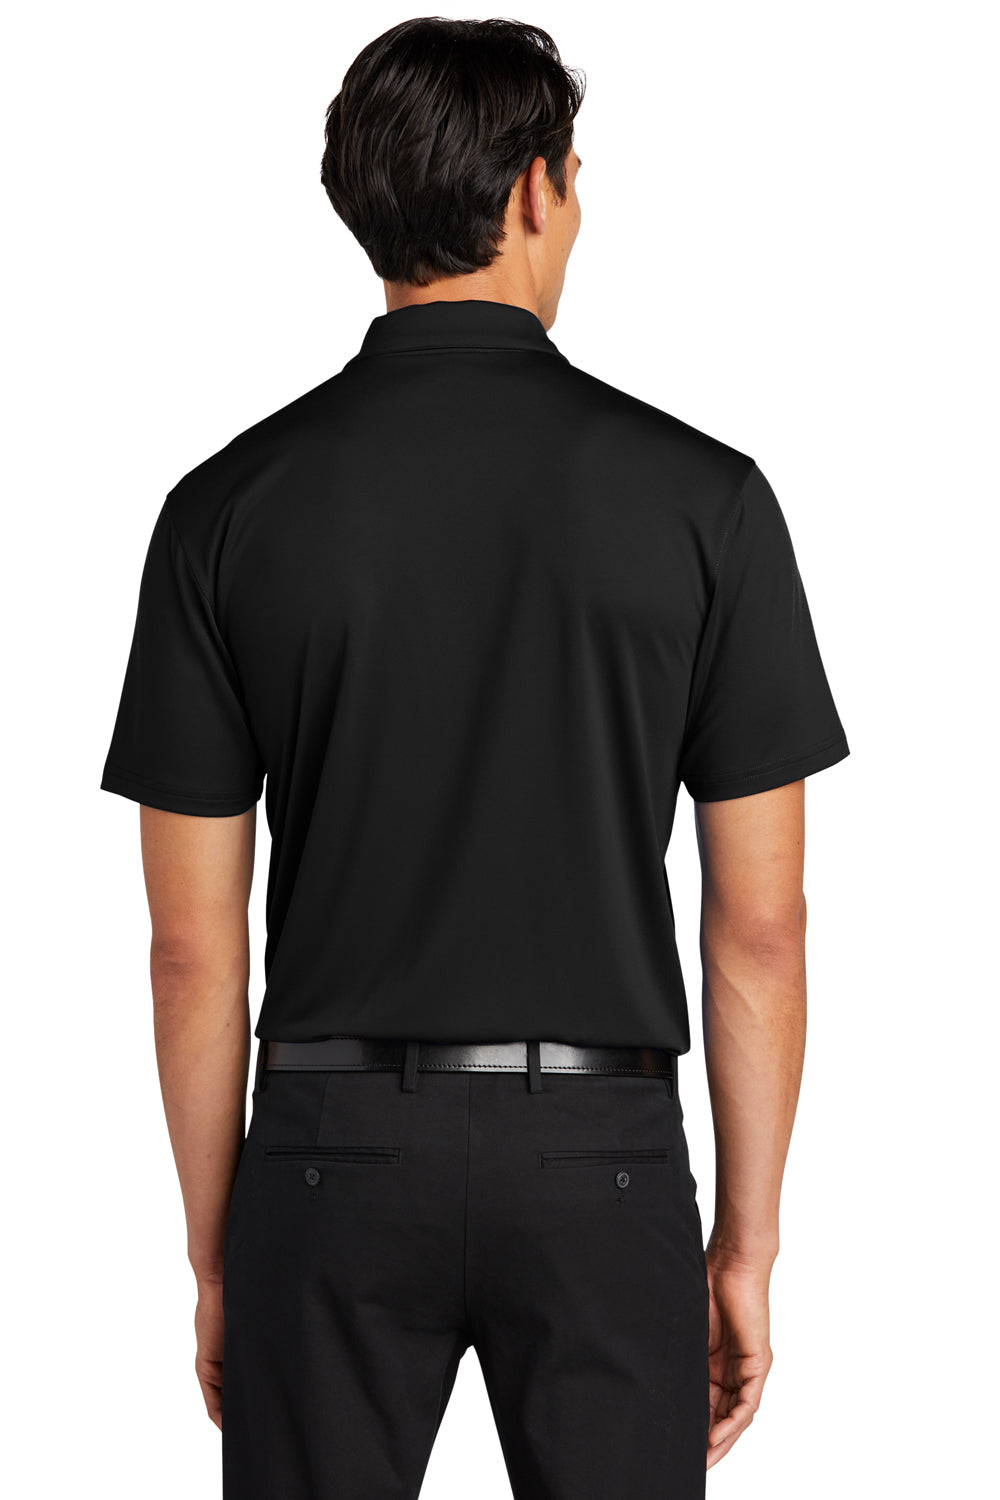 Port Authority K398 Staff Performance Short Sleeve Polo Shirt Black Back